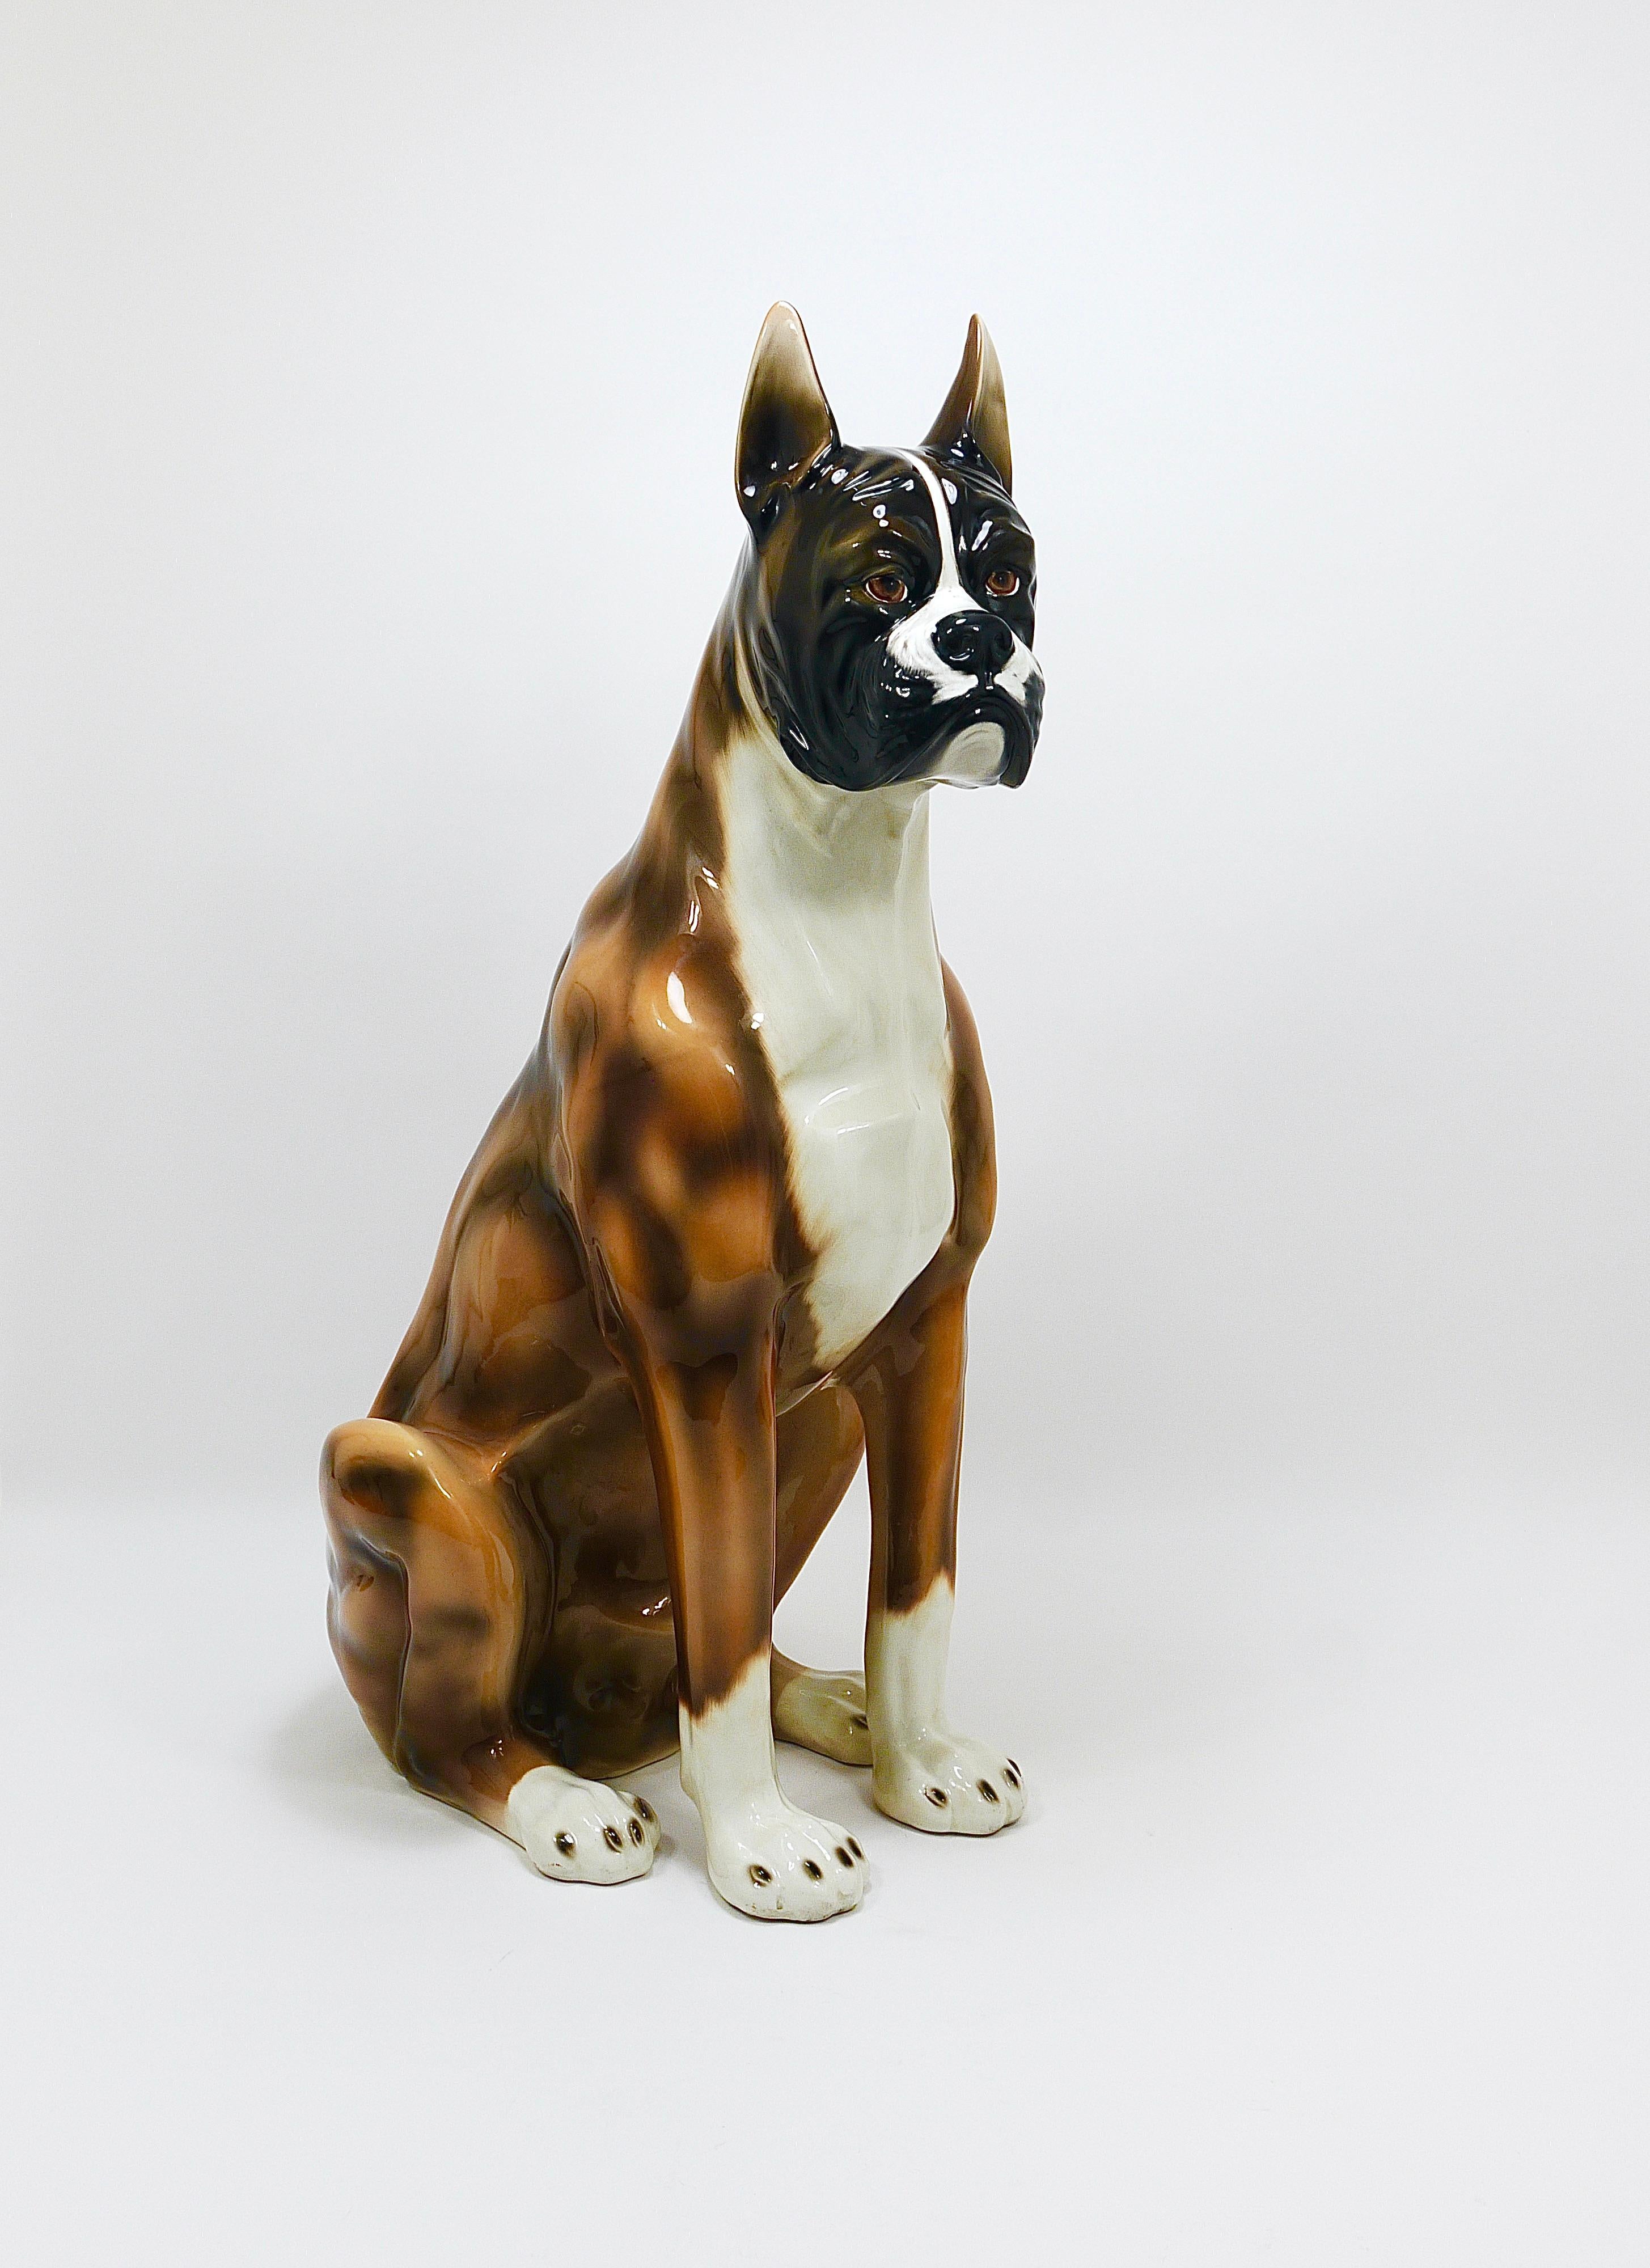 20th Century Boxer Dog Life-Size Majolica Statue Sculpture, Glazed Ceramic, Italy, 1970s For Sale